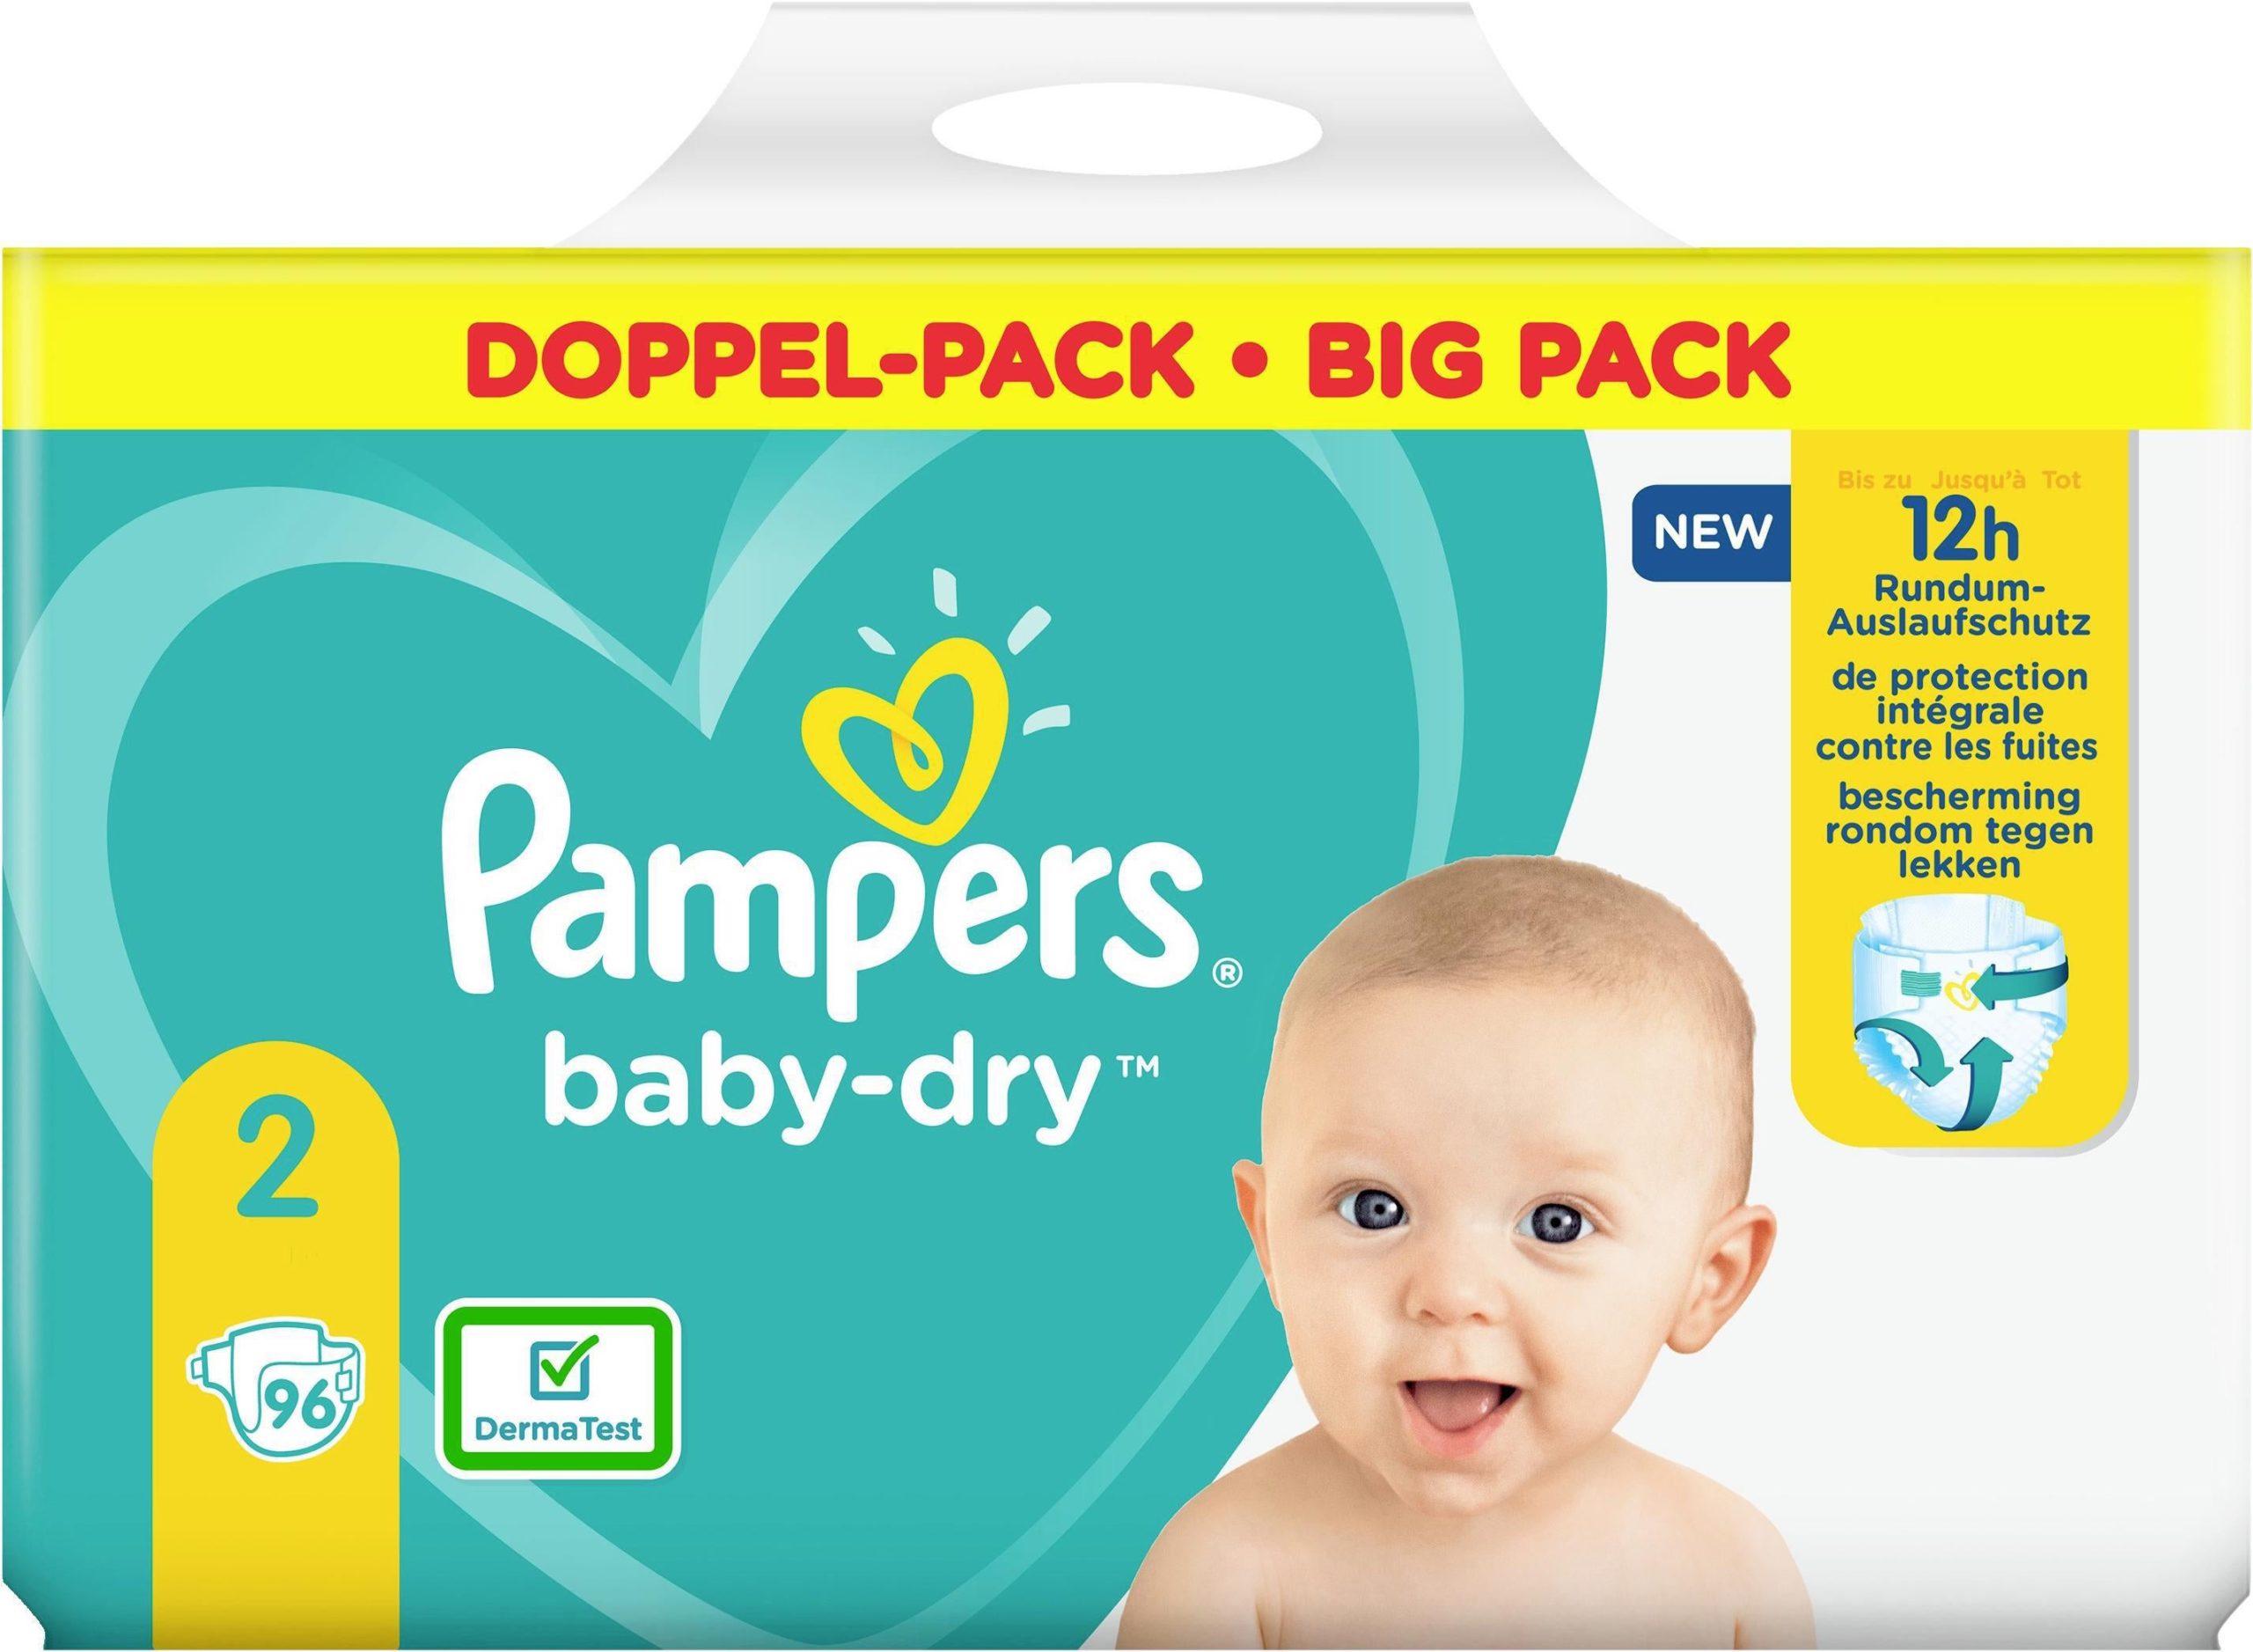 Verrassend genoeg Slovenië Somatische cel Pampers Baby Dry Windeln Angebote | Windelnangebote